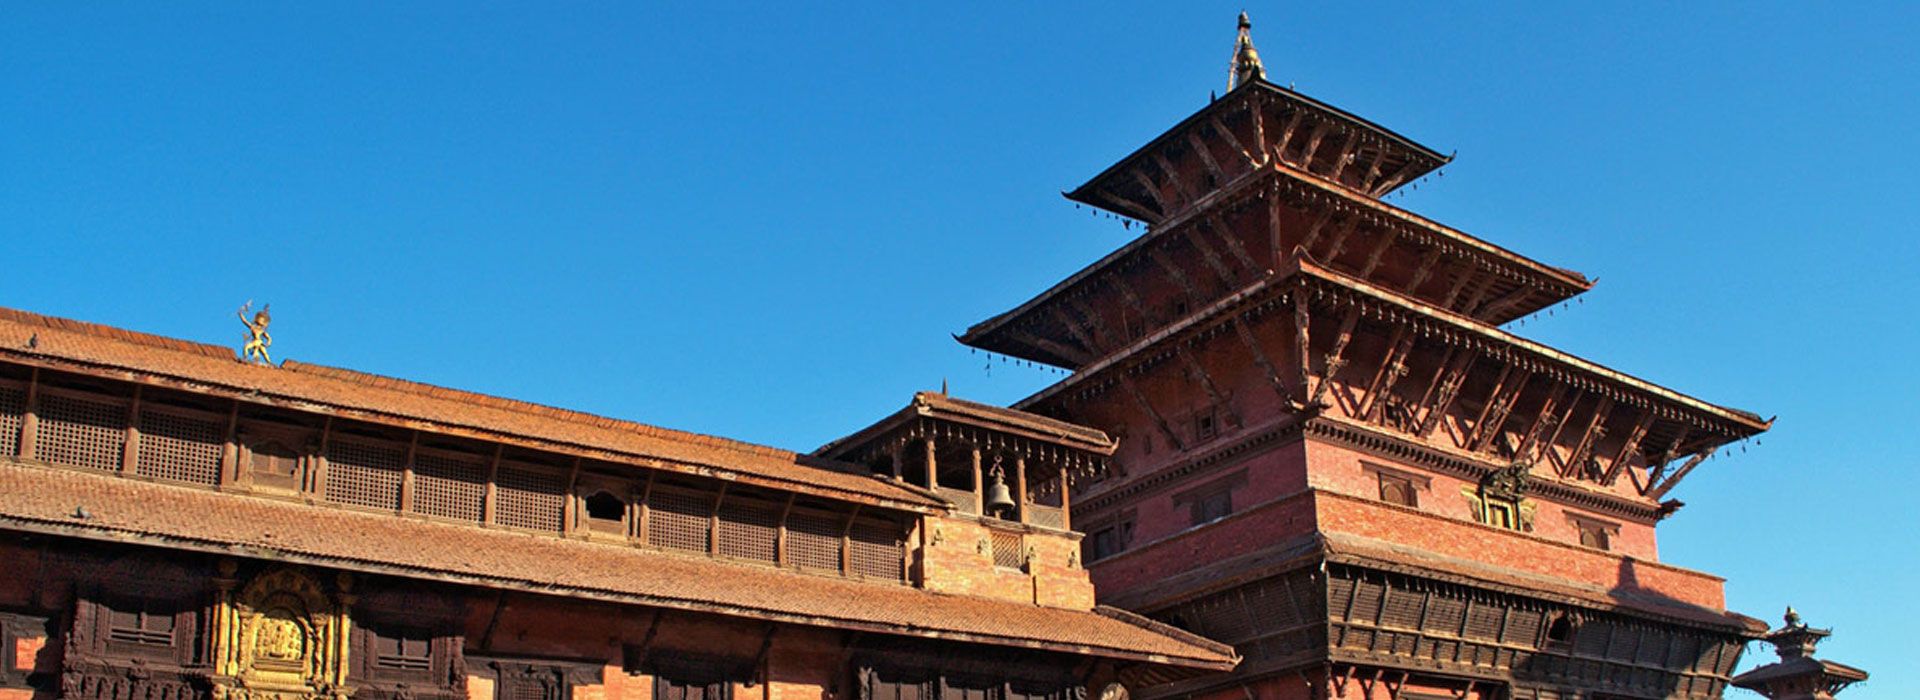 Patan Durbar Square, an UNESCO heritage site